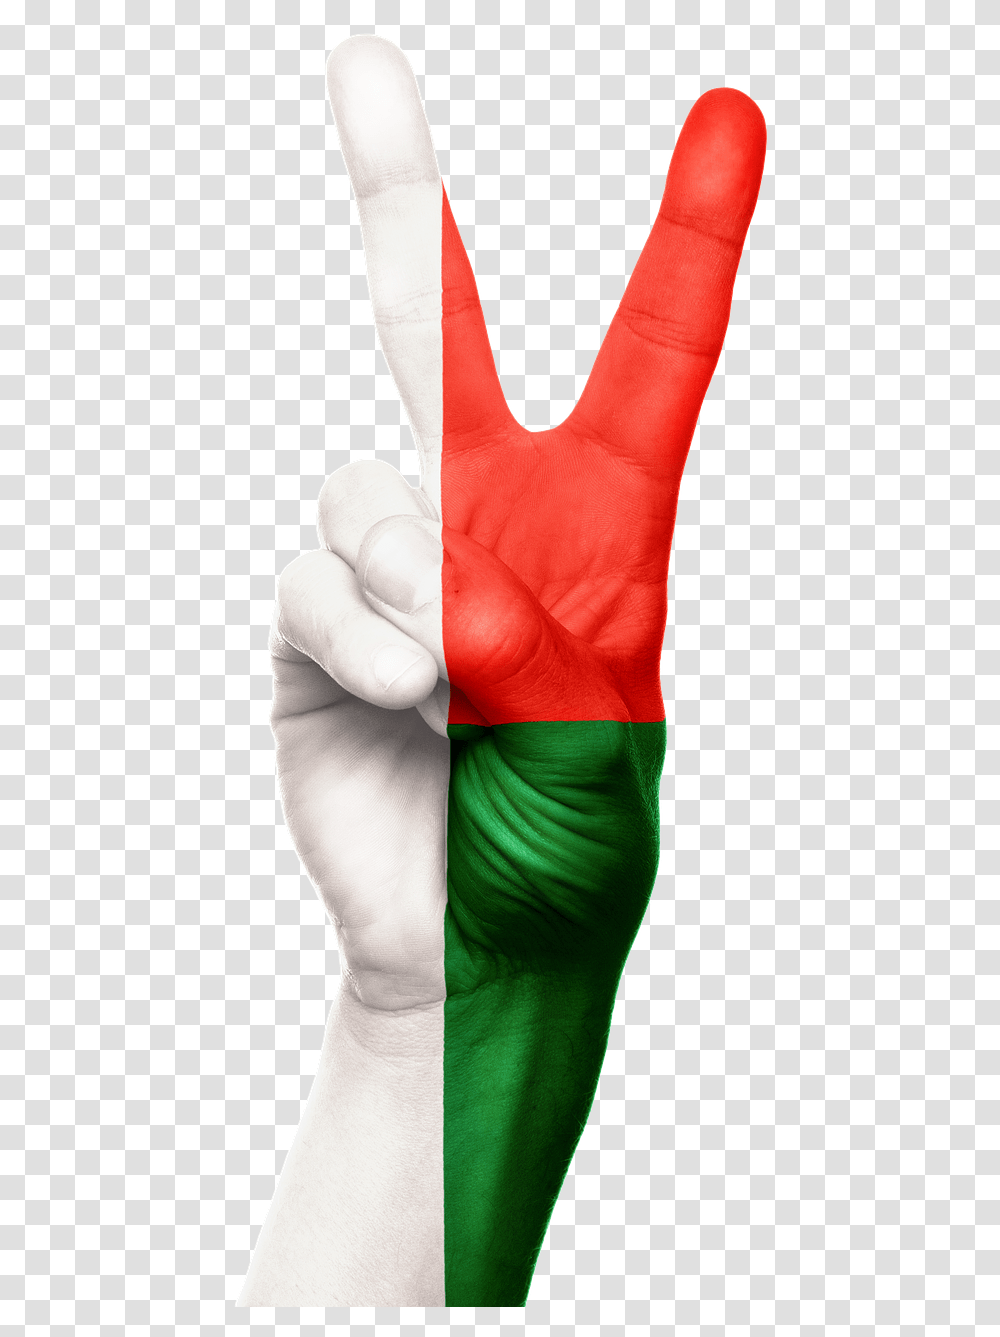 Madagascar Hand Flag Free Photo Latex, Finger, Person, Human, Wrist Transparent Png